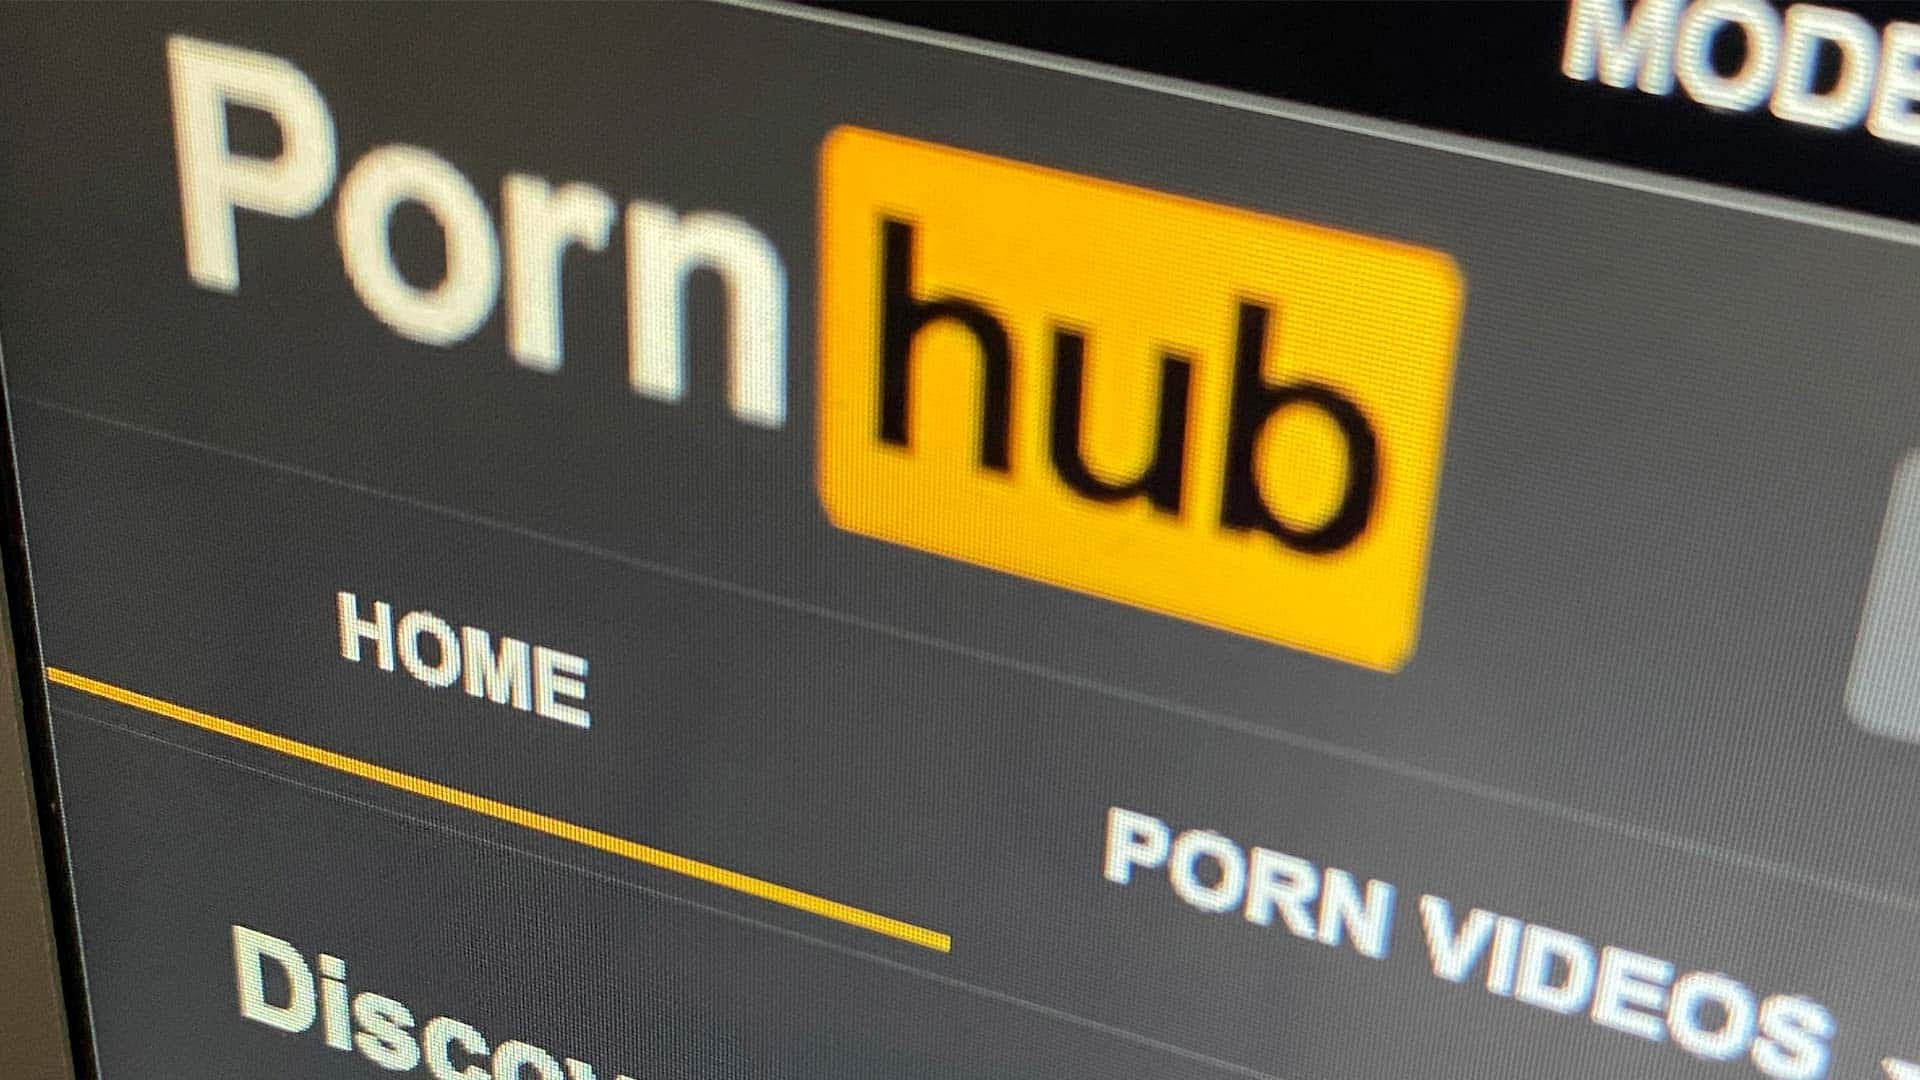 Pornhub Access